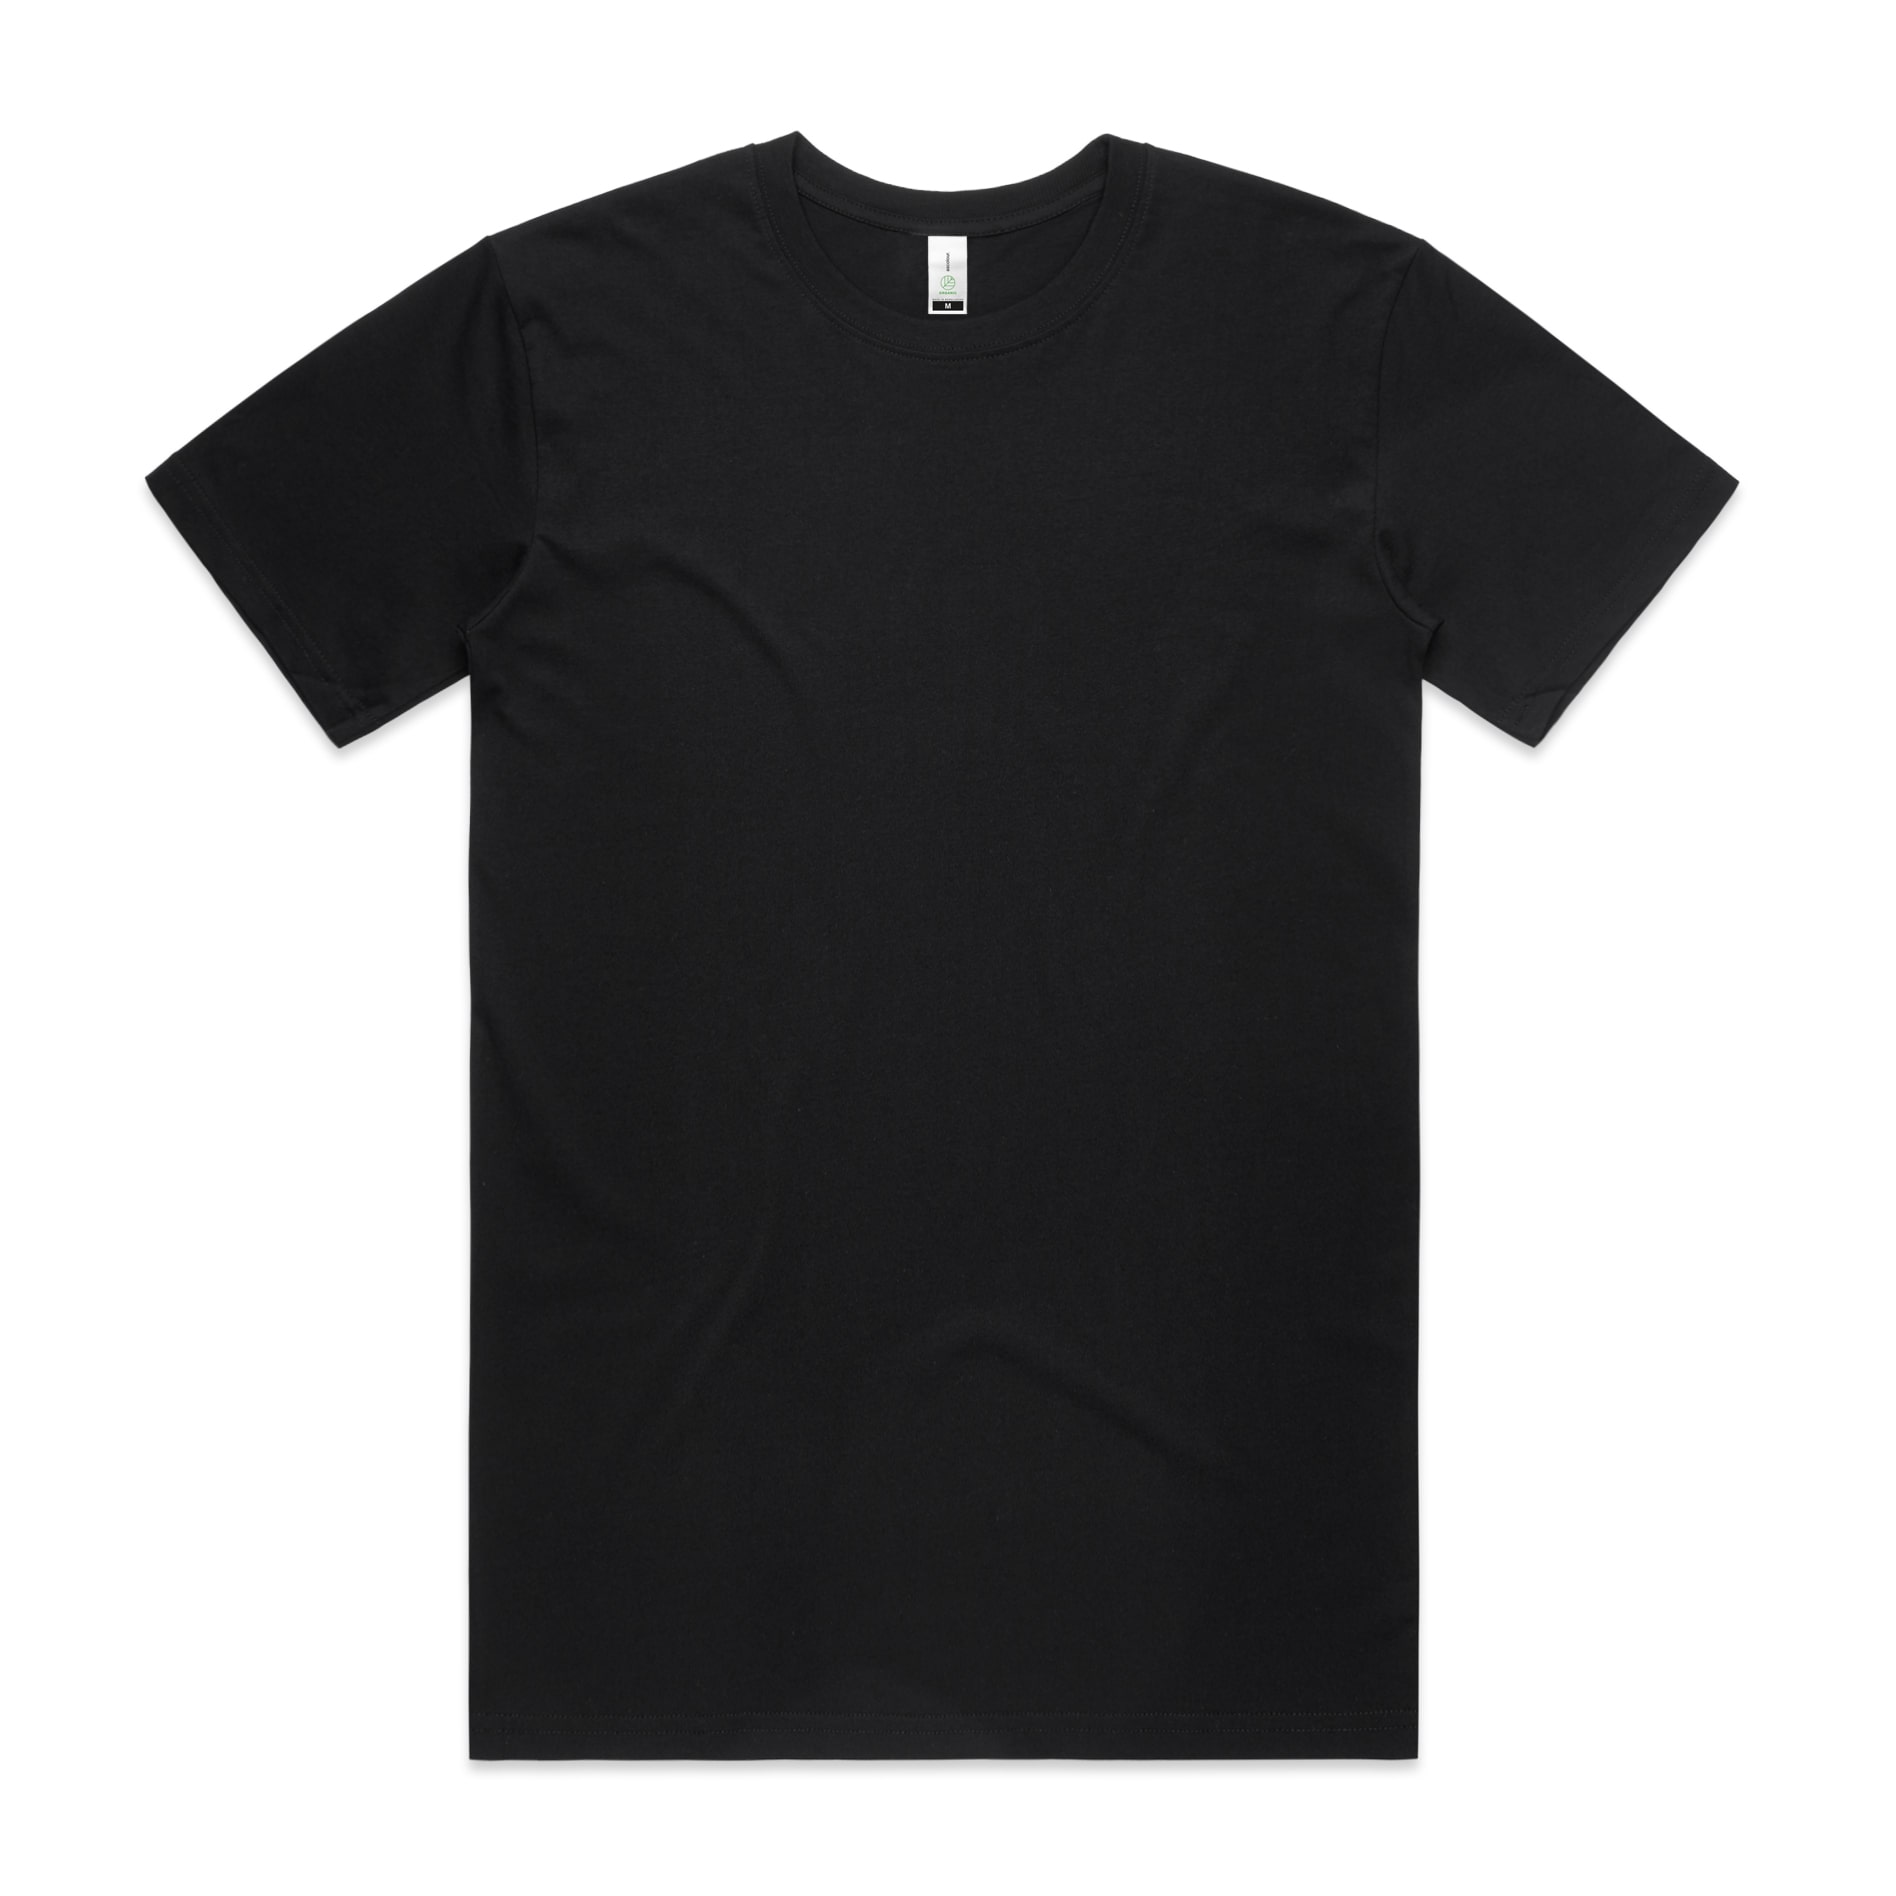 Personalised mens t shirts - 5001g staple organic tee black